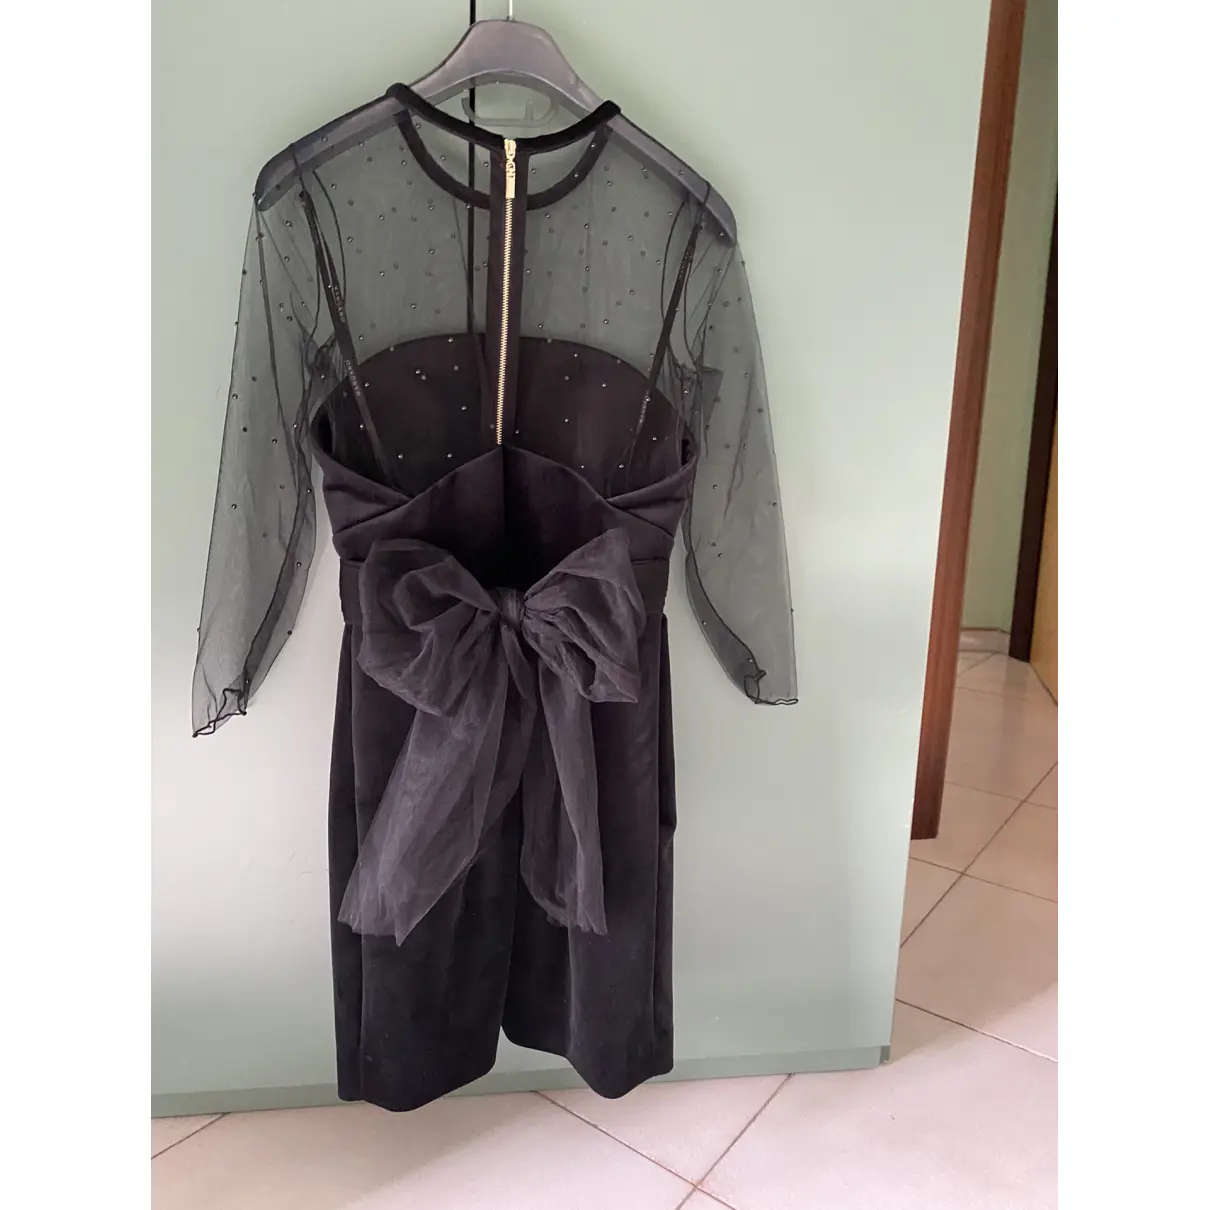 Buy Mangano Mini dress online